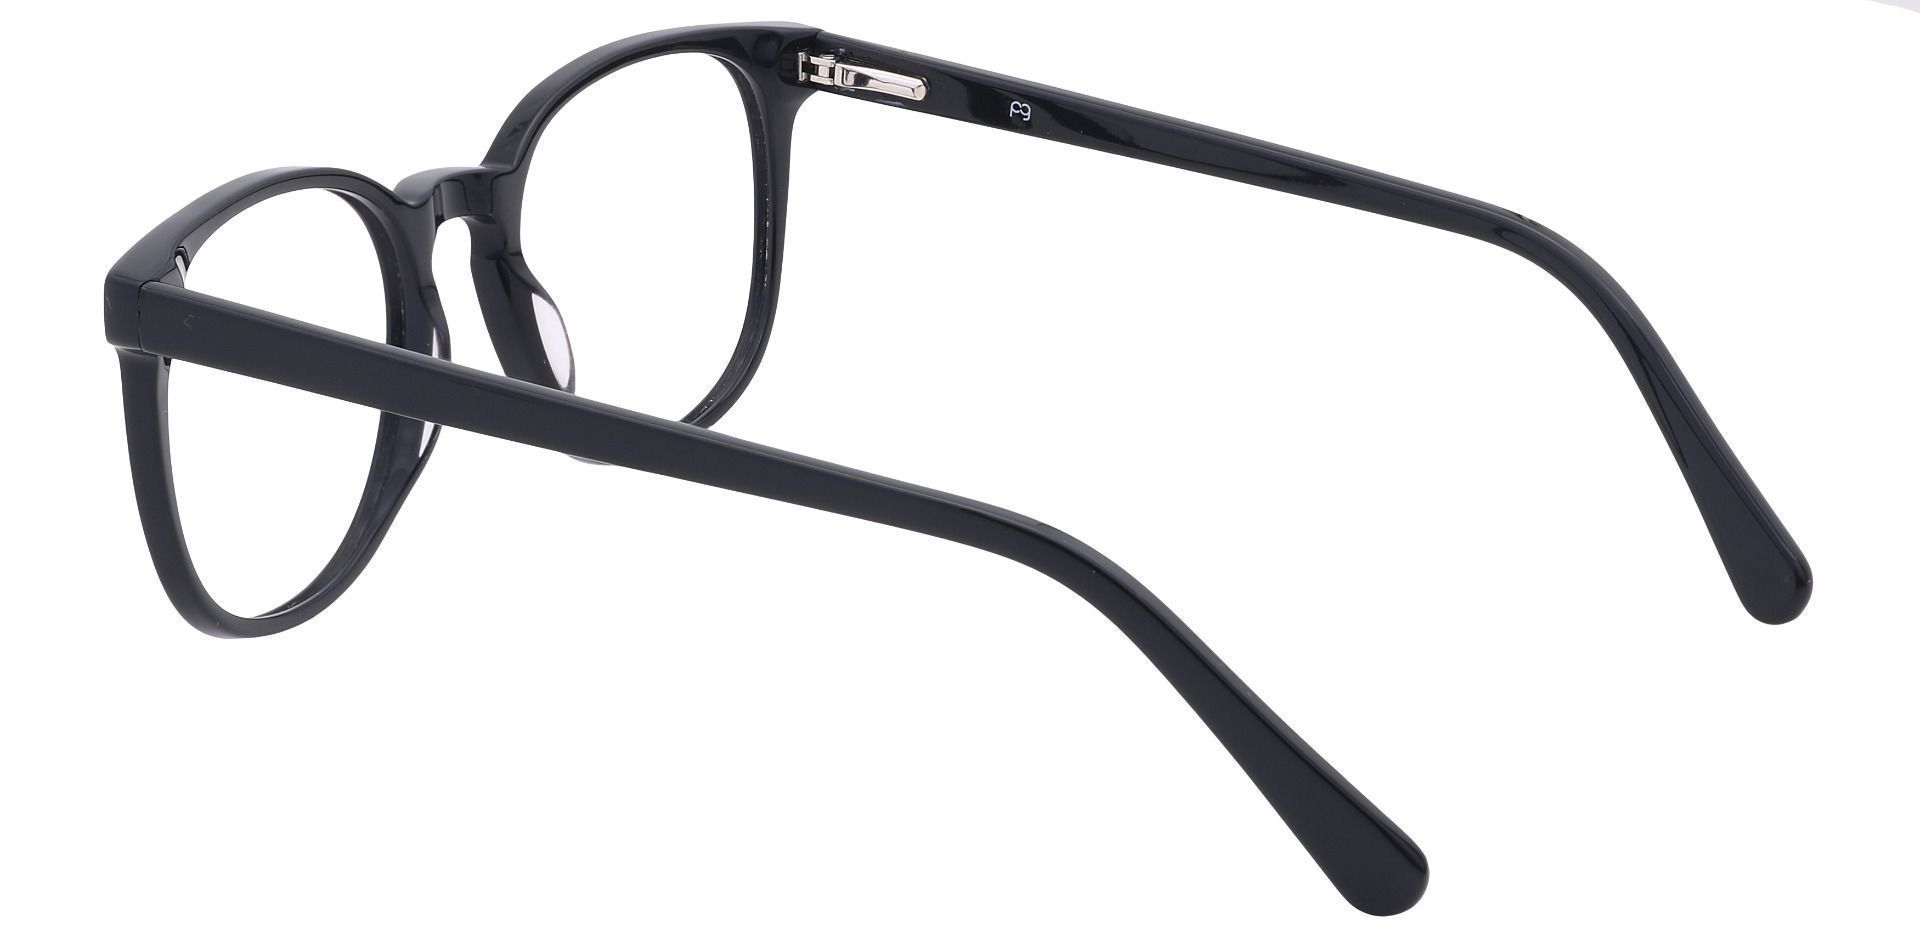 Nebula Round Lined Bifocal Glasses - Black